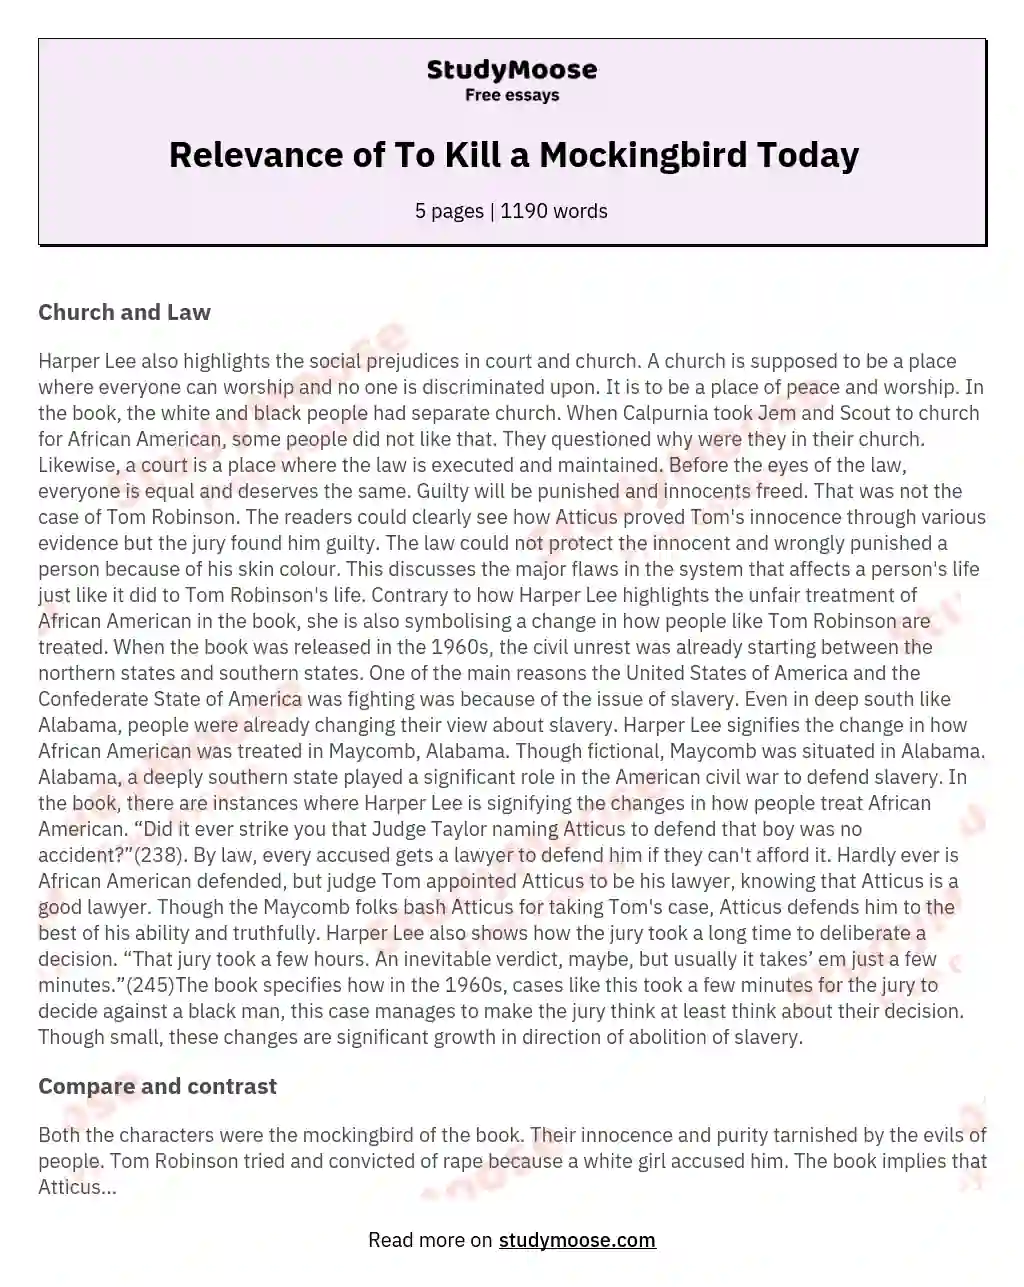 Relevance of To Kill a Mockingbird Today essay